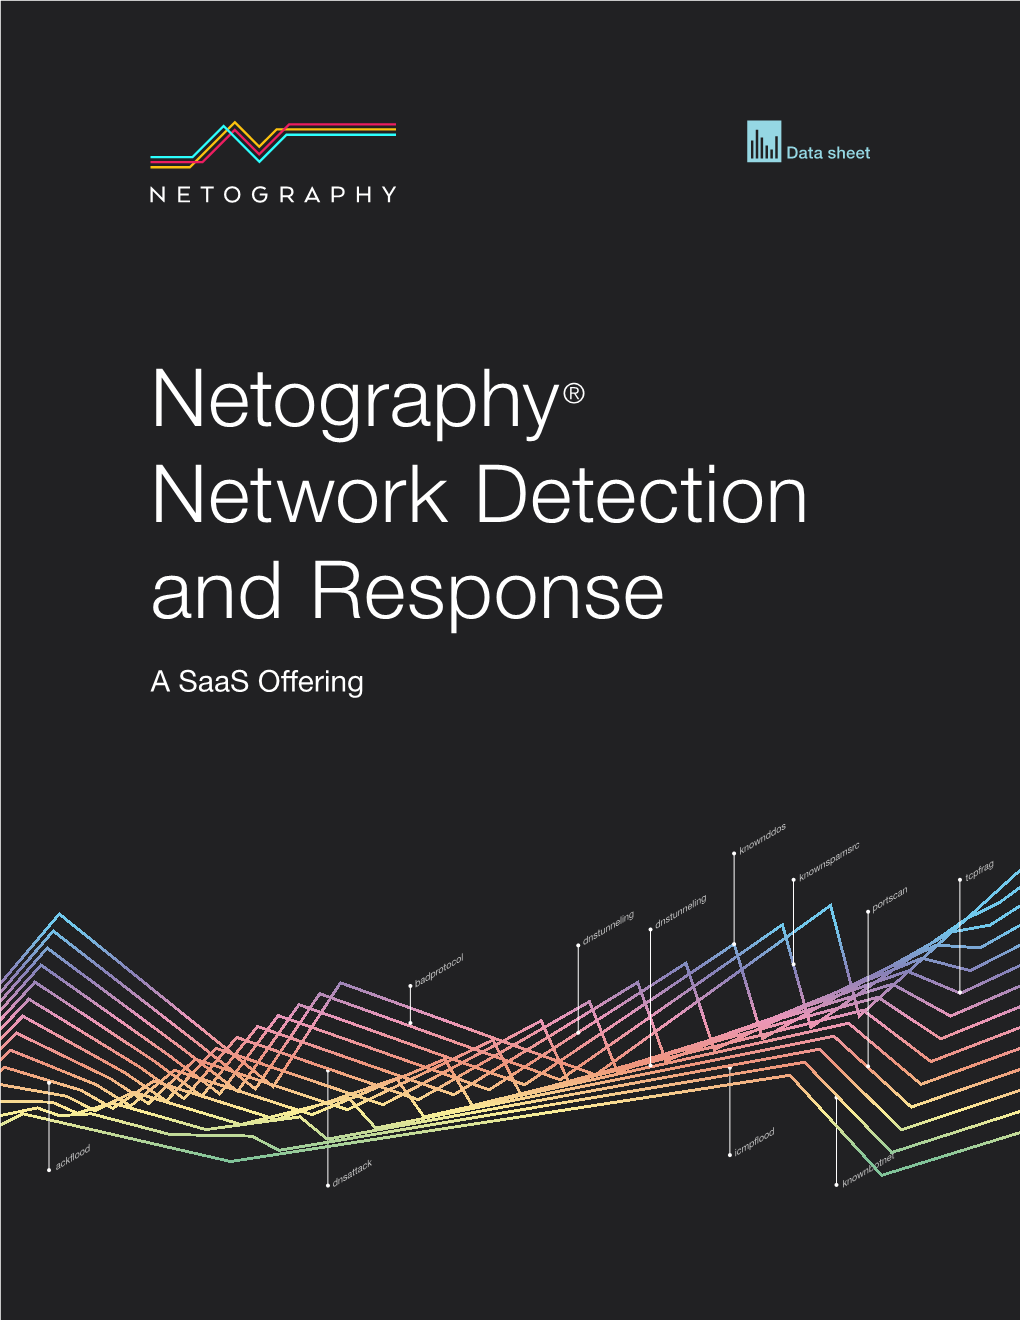 Netography Network Detection & Response Data Sheet